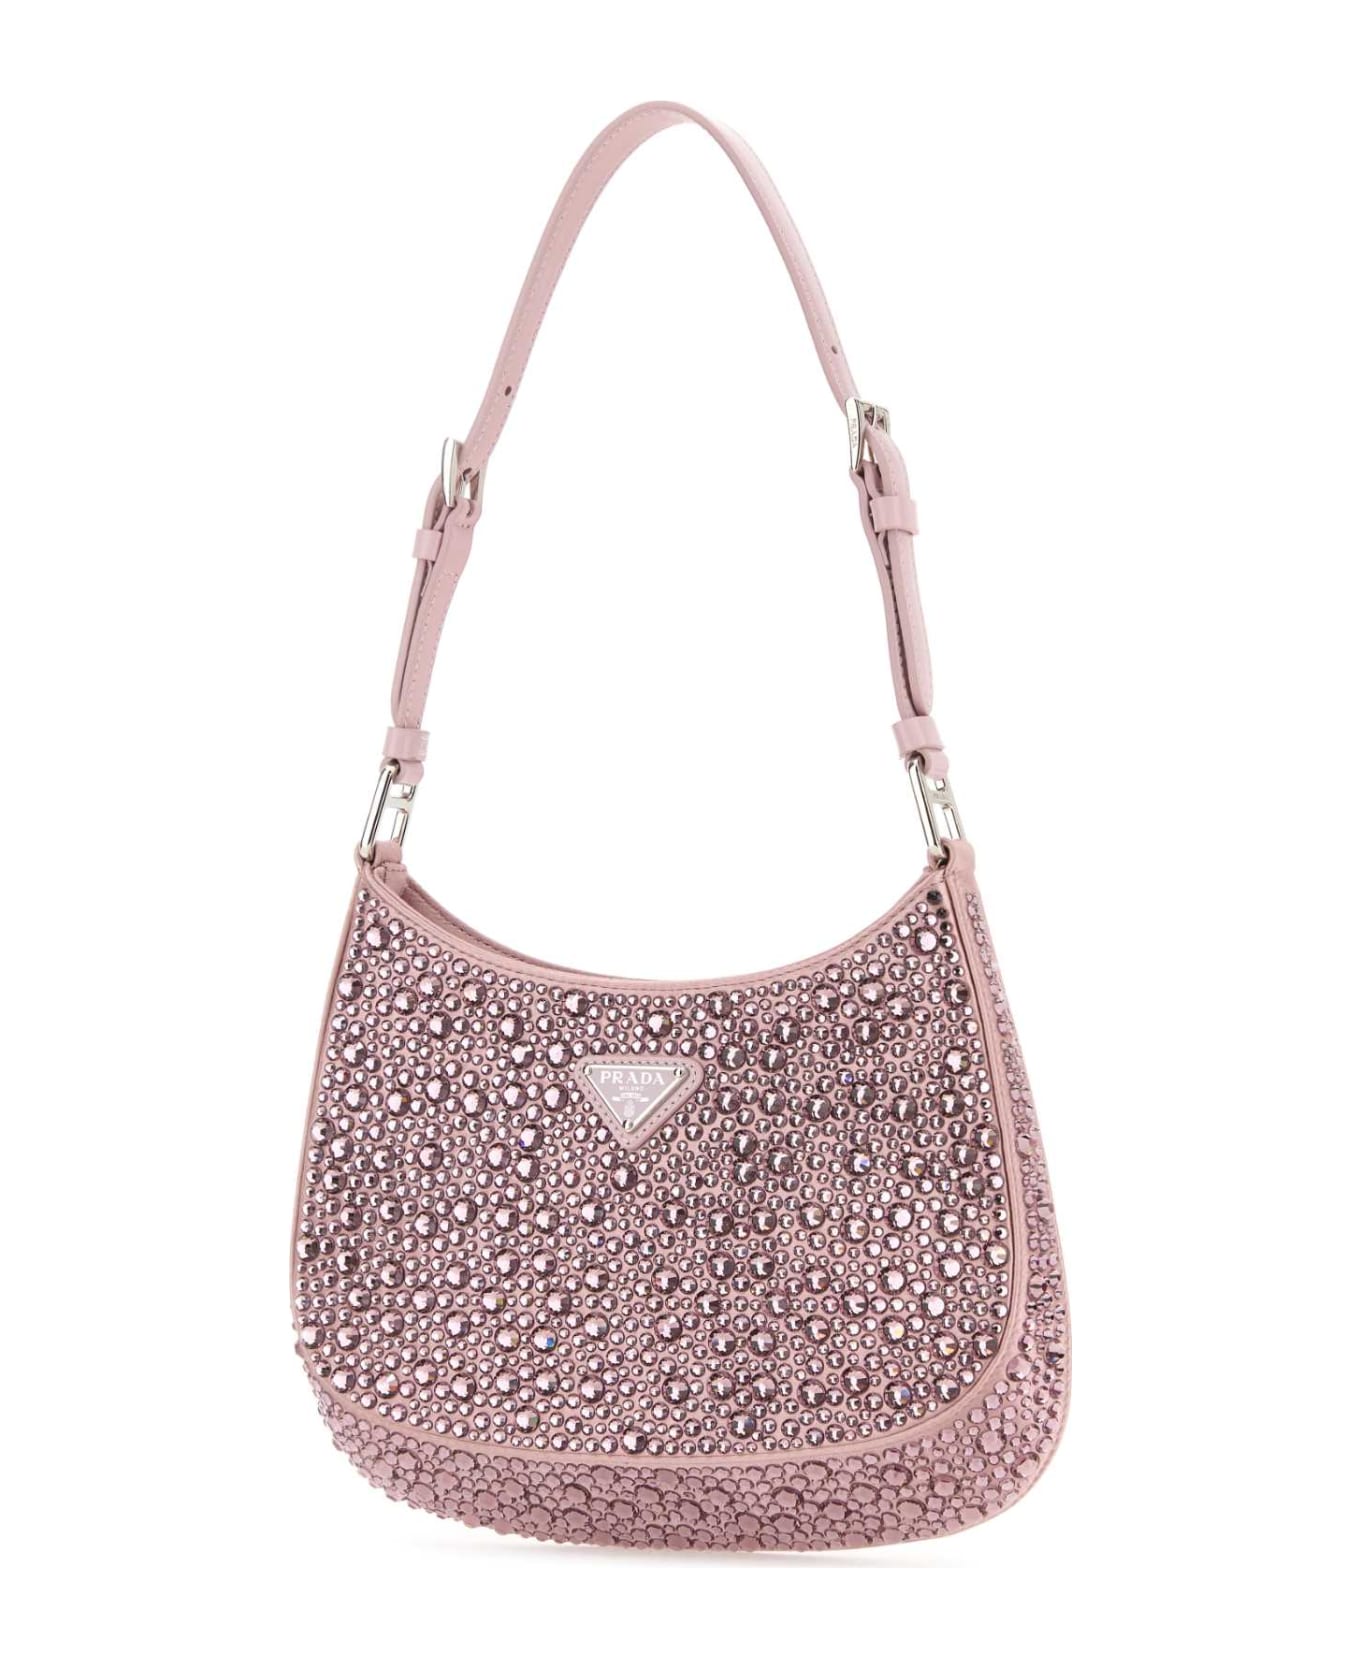 Prada Embellished Satin Cleo Handbag - ALABASTRO